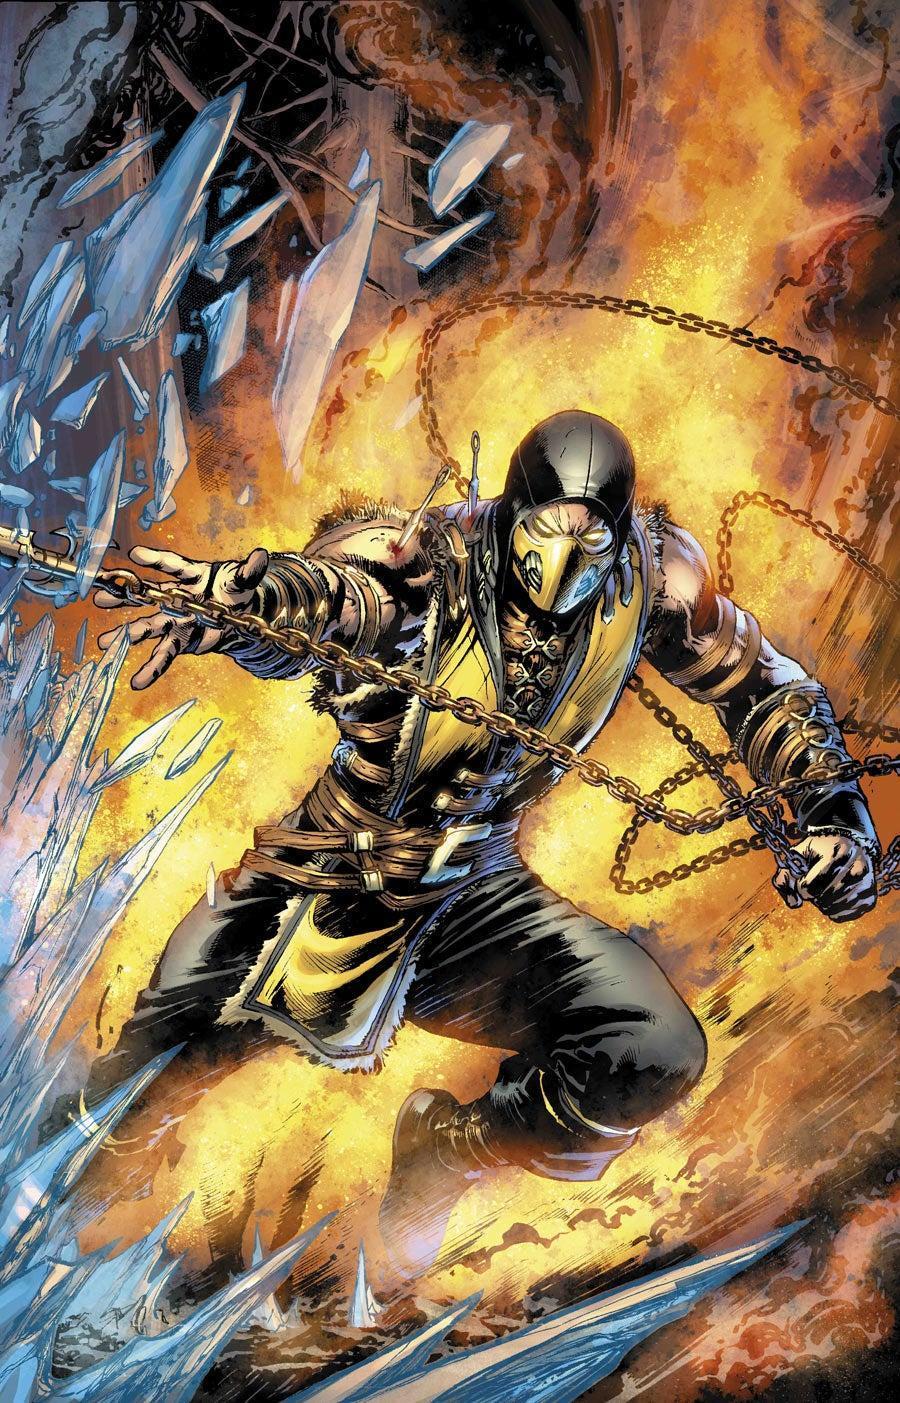 NYCC: DC Comics Announces Mortal Kombat X Digital Series